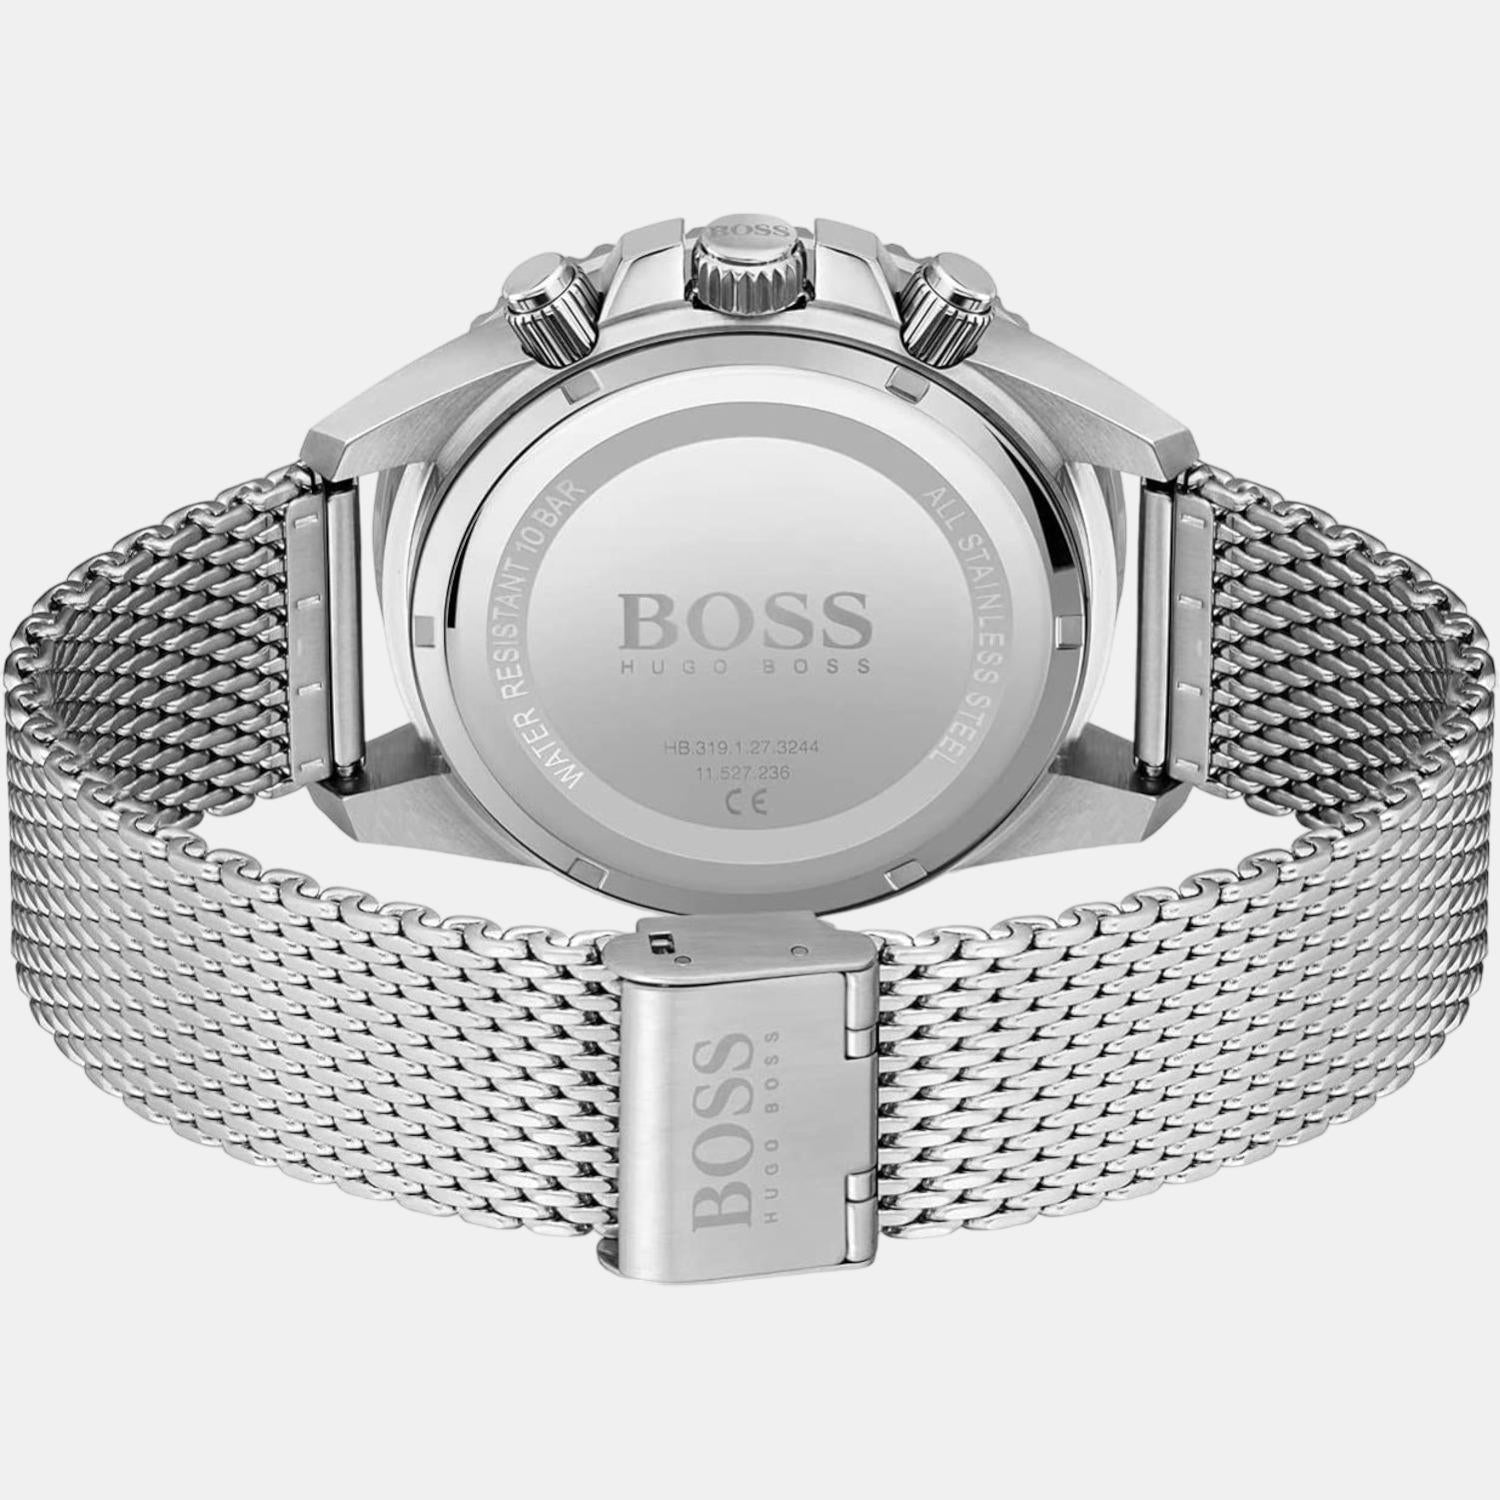 BOSS - Link-bracelet watch with guilloché black dial